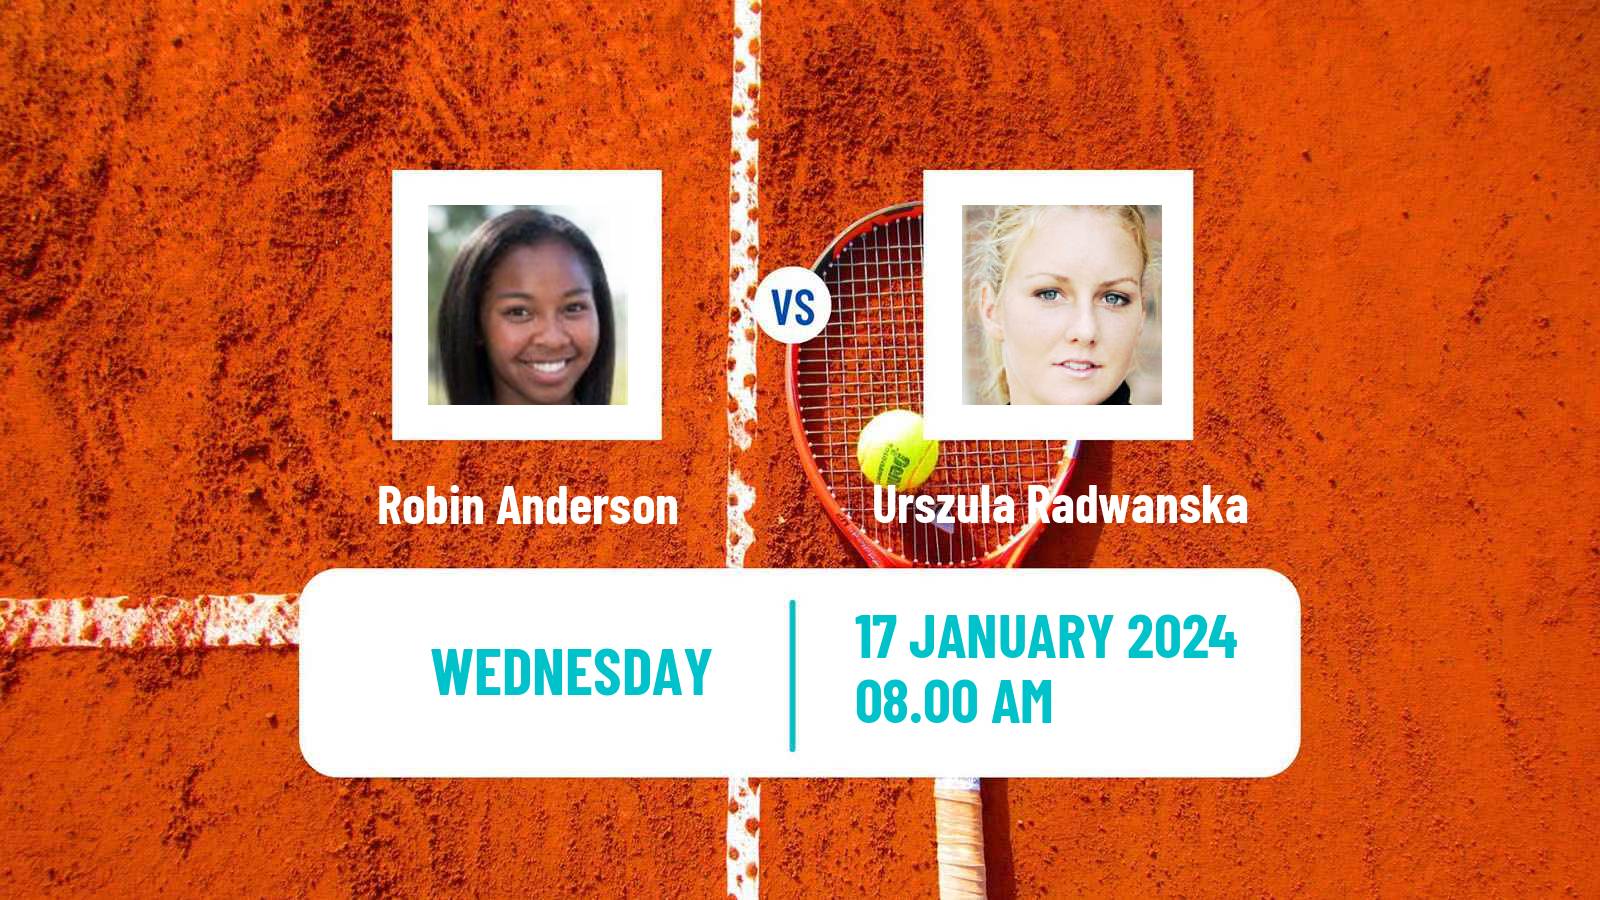 Tennis ITF W35 Sunderland Women Robin Anderson - Urszula Radwanska